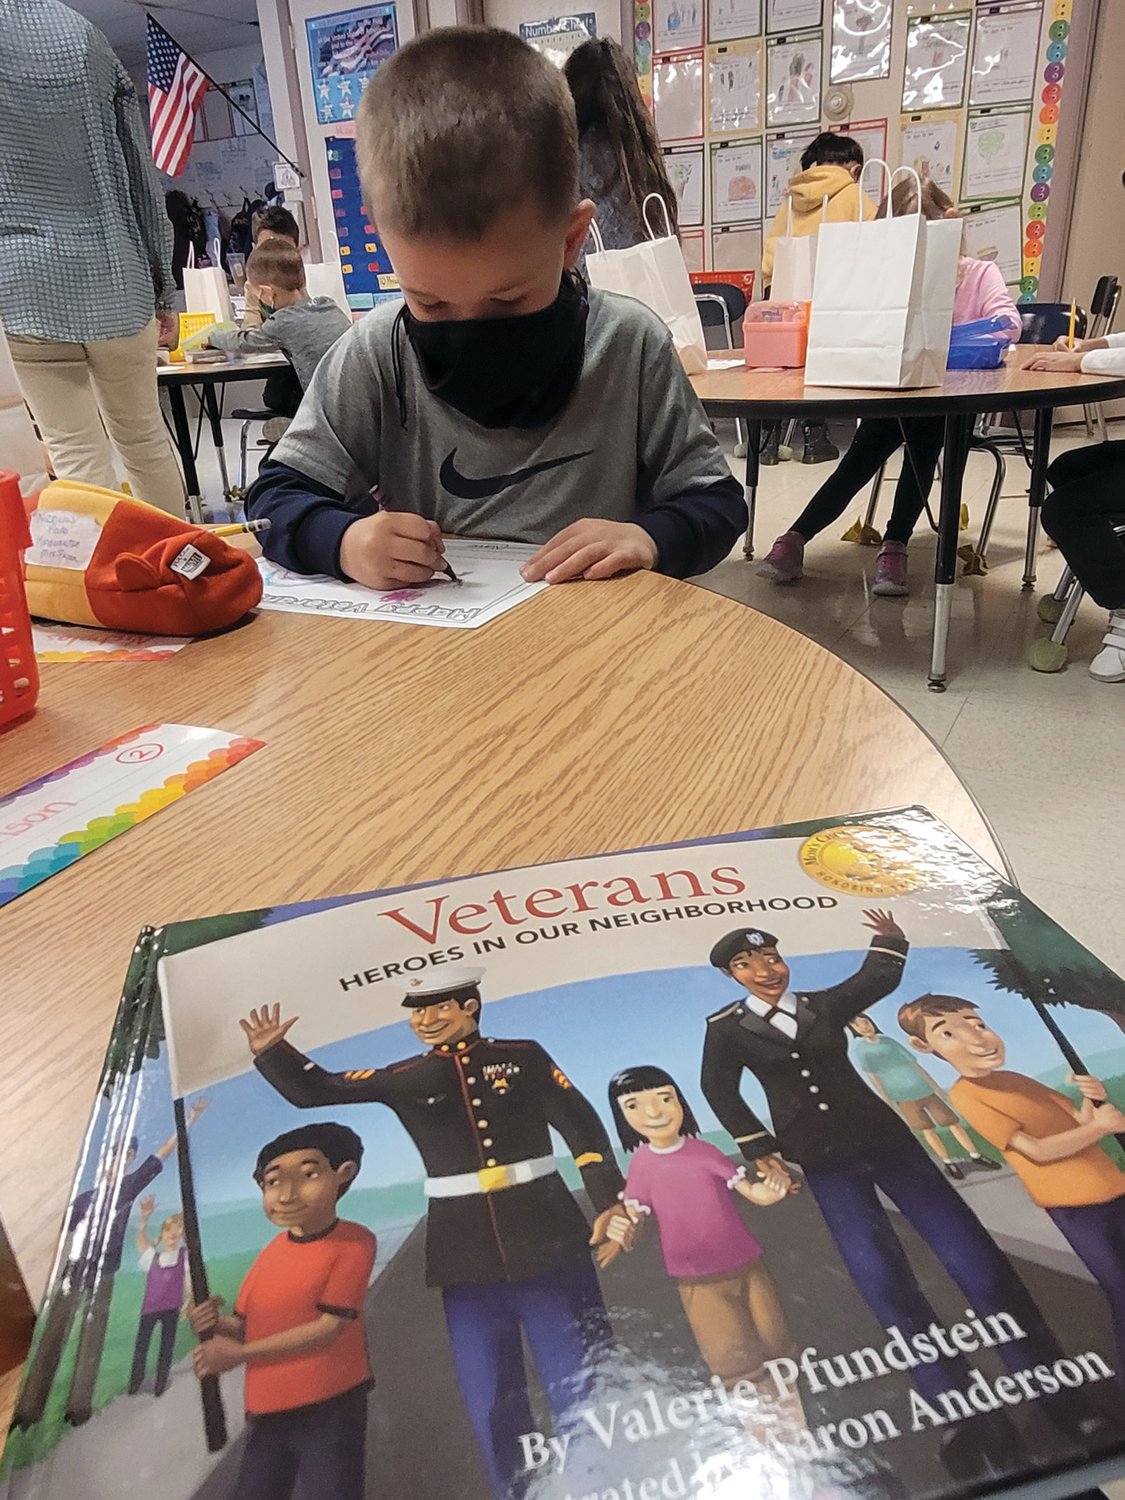 Barnes School kindergarten students read books like “Hero Dad” and “Veterans: Heroes in our Neighborhood” leading up to Veterans Day.